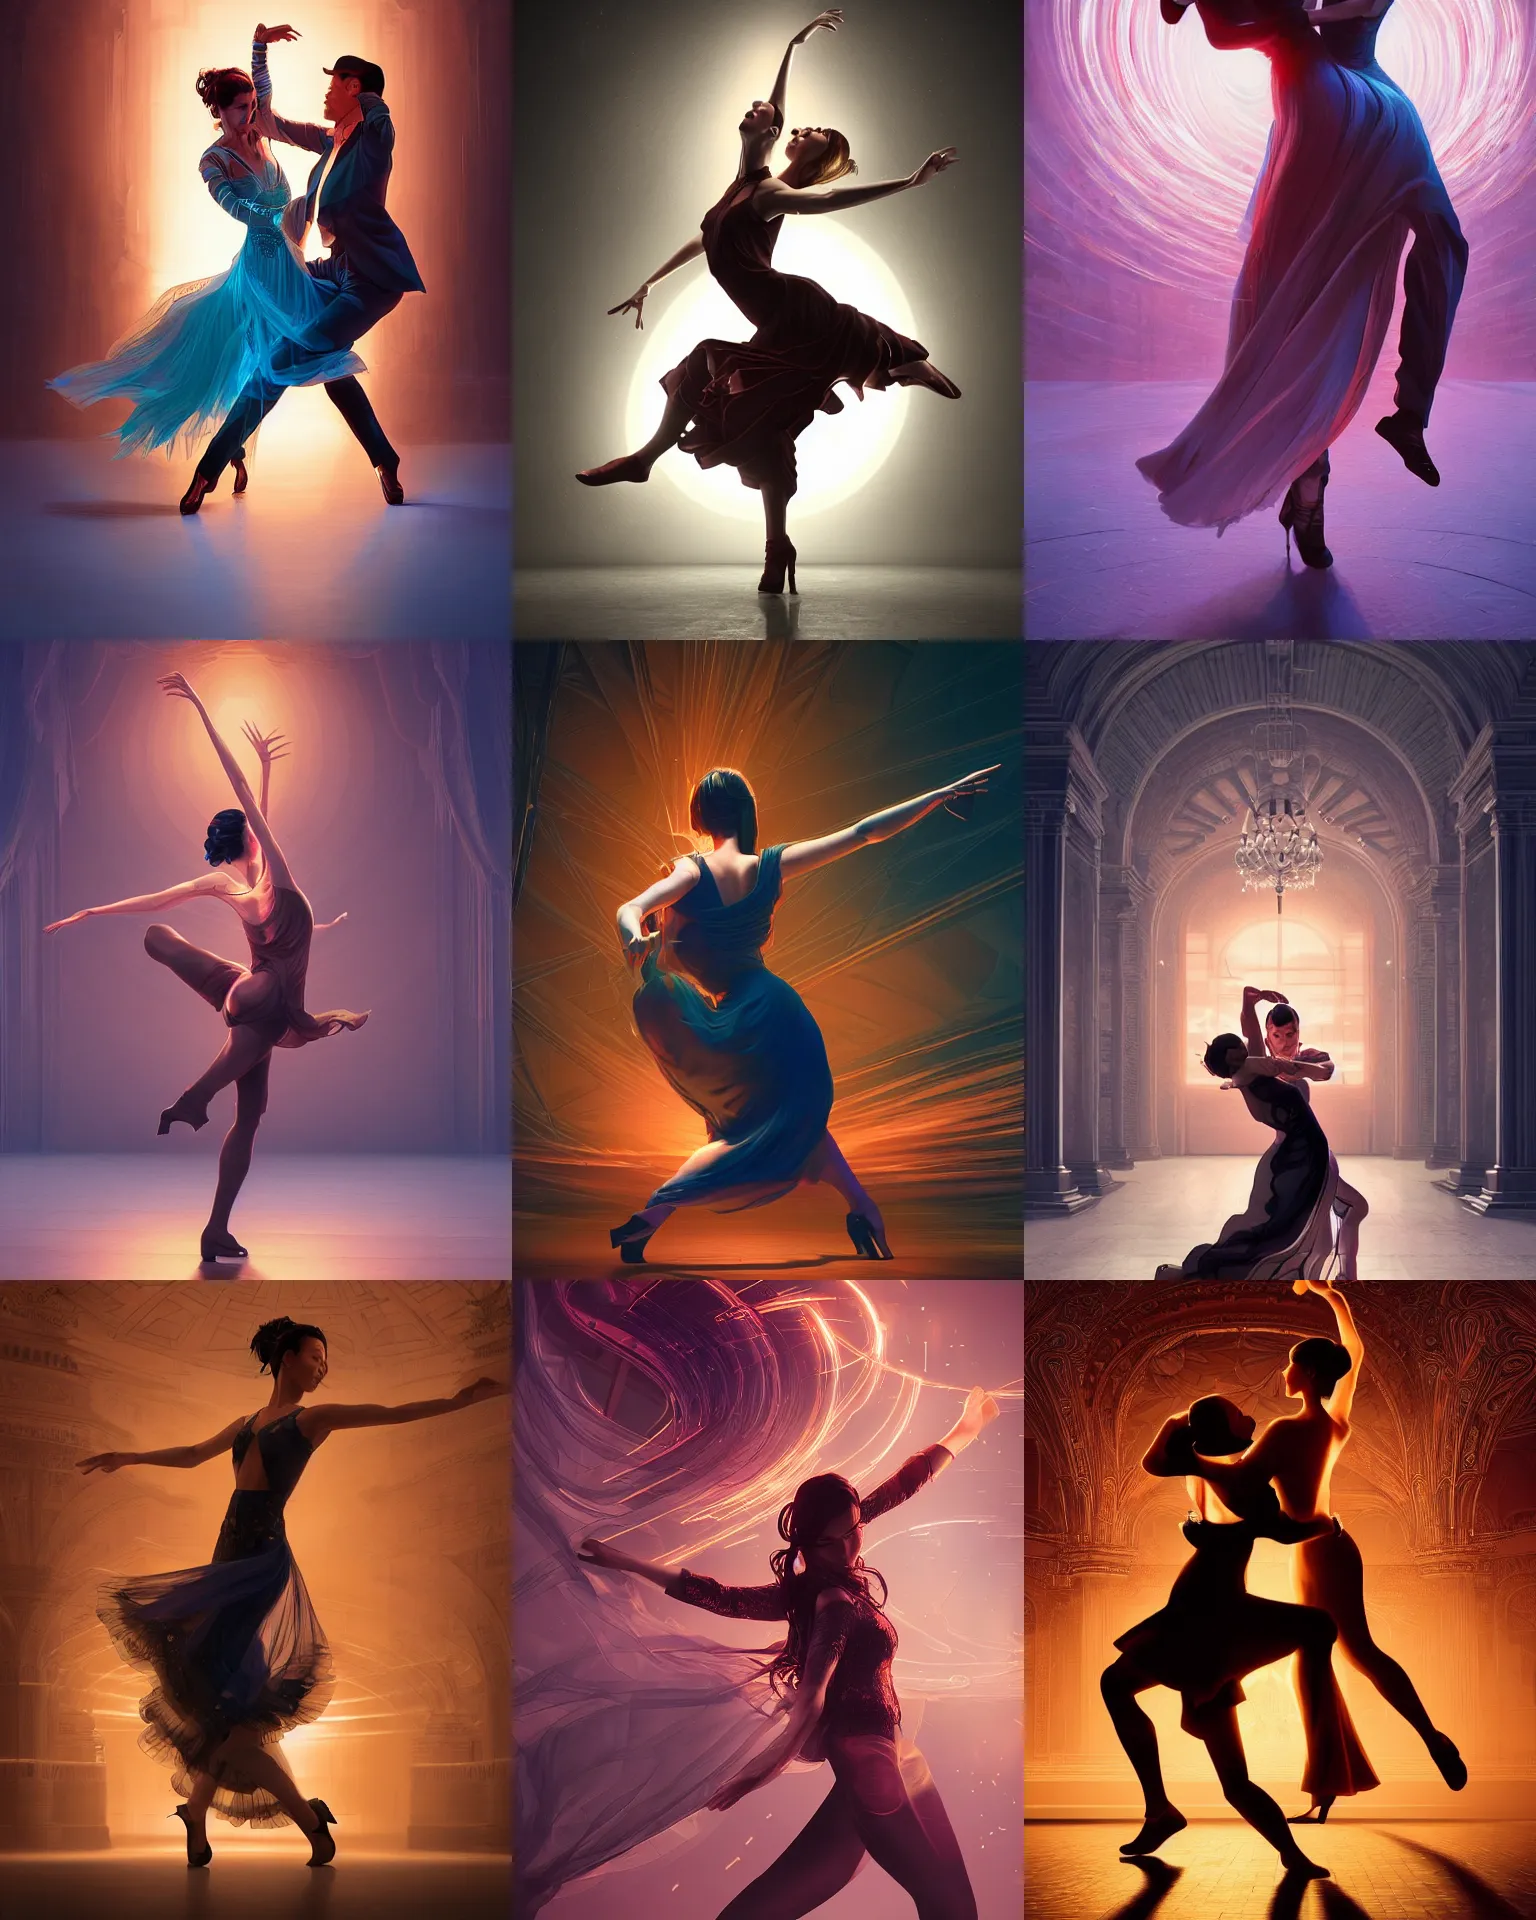 Prompt: a woman dancing tango, symmetrical, intricate, epic lighting, cinematic composition, hyper realistic, 8 k resolution, unreal engine 5, by artgerm, tooth wu, dan mumford, beeple, wlop, rossdraws, james jean, marc simonetti, artstation